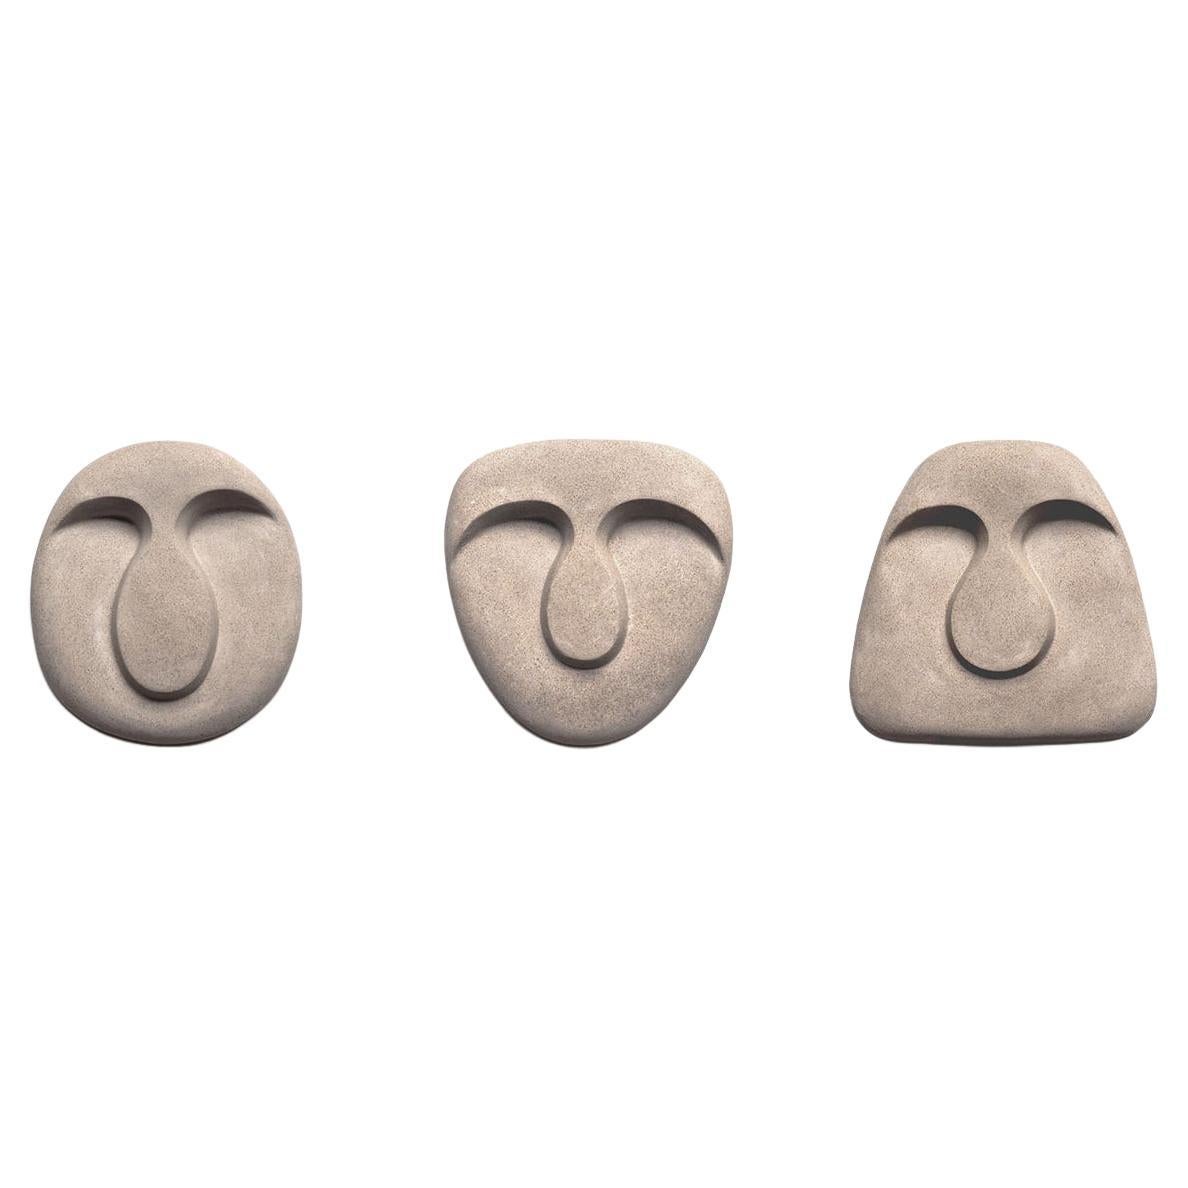 21st Century Set of Wall Sculptures, Handmade Stuccoforte Masks Idoli, Kanz 